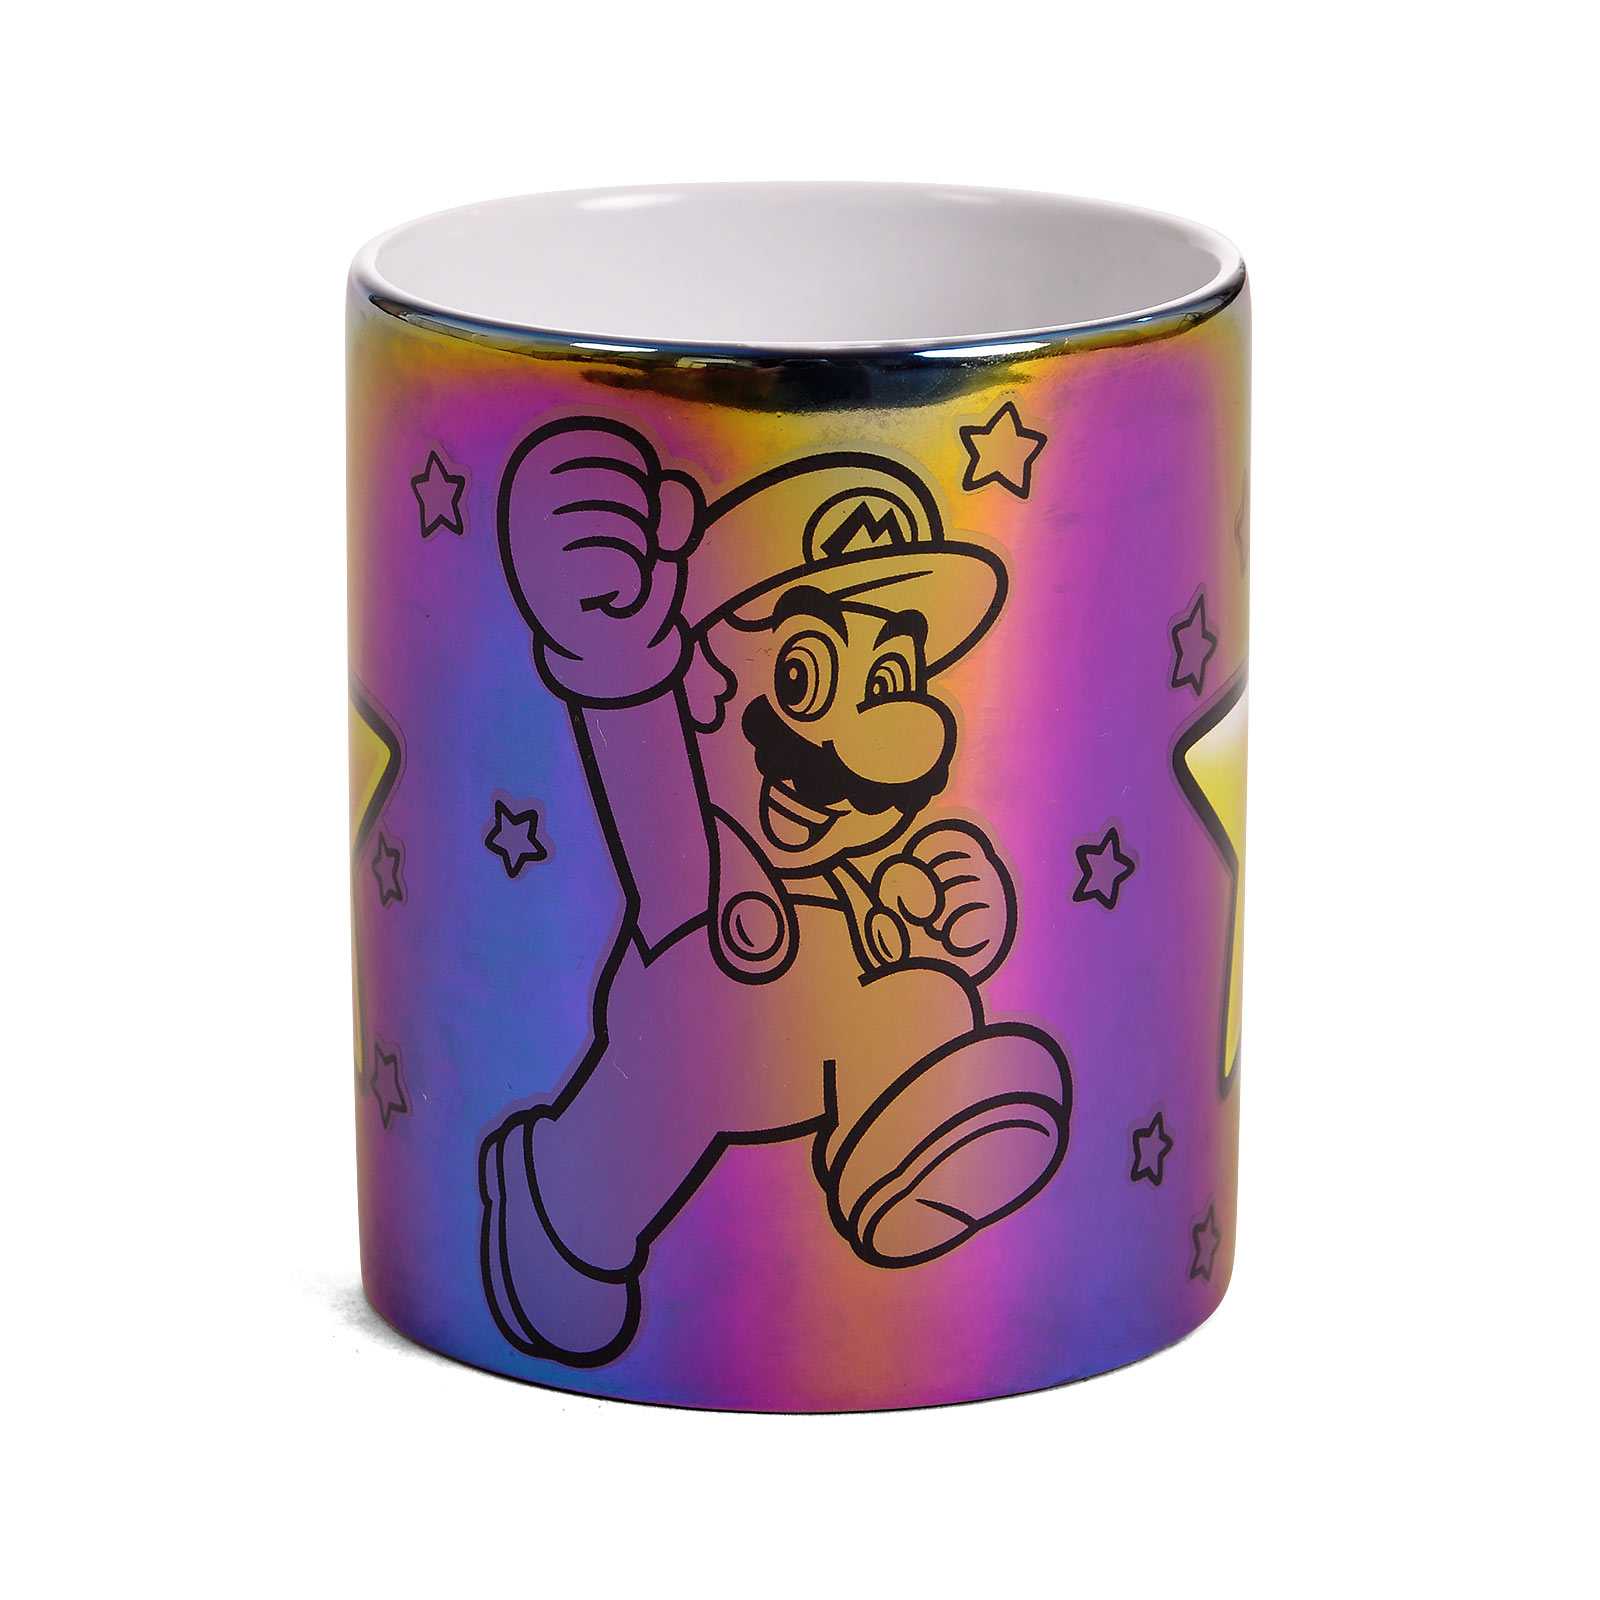 Super Mario - Star Power Metallic Mug